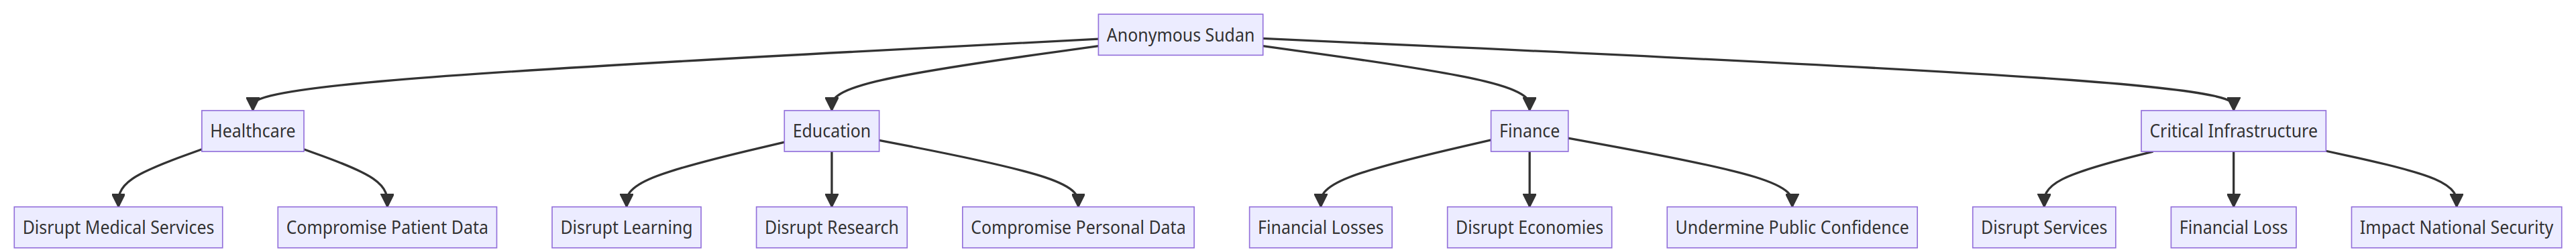 Anonymous Sudan their strategic approach